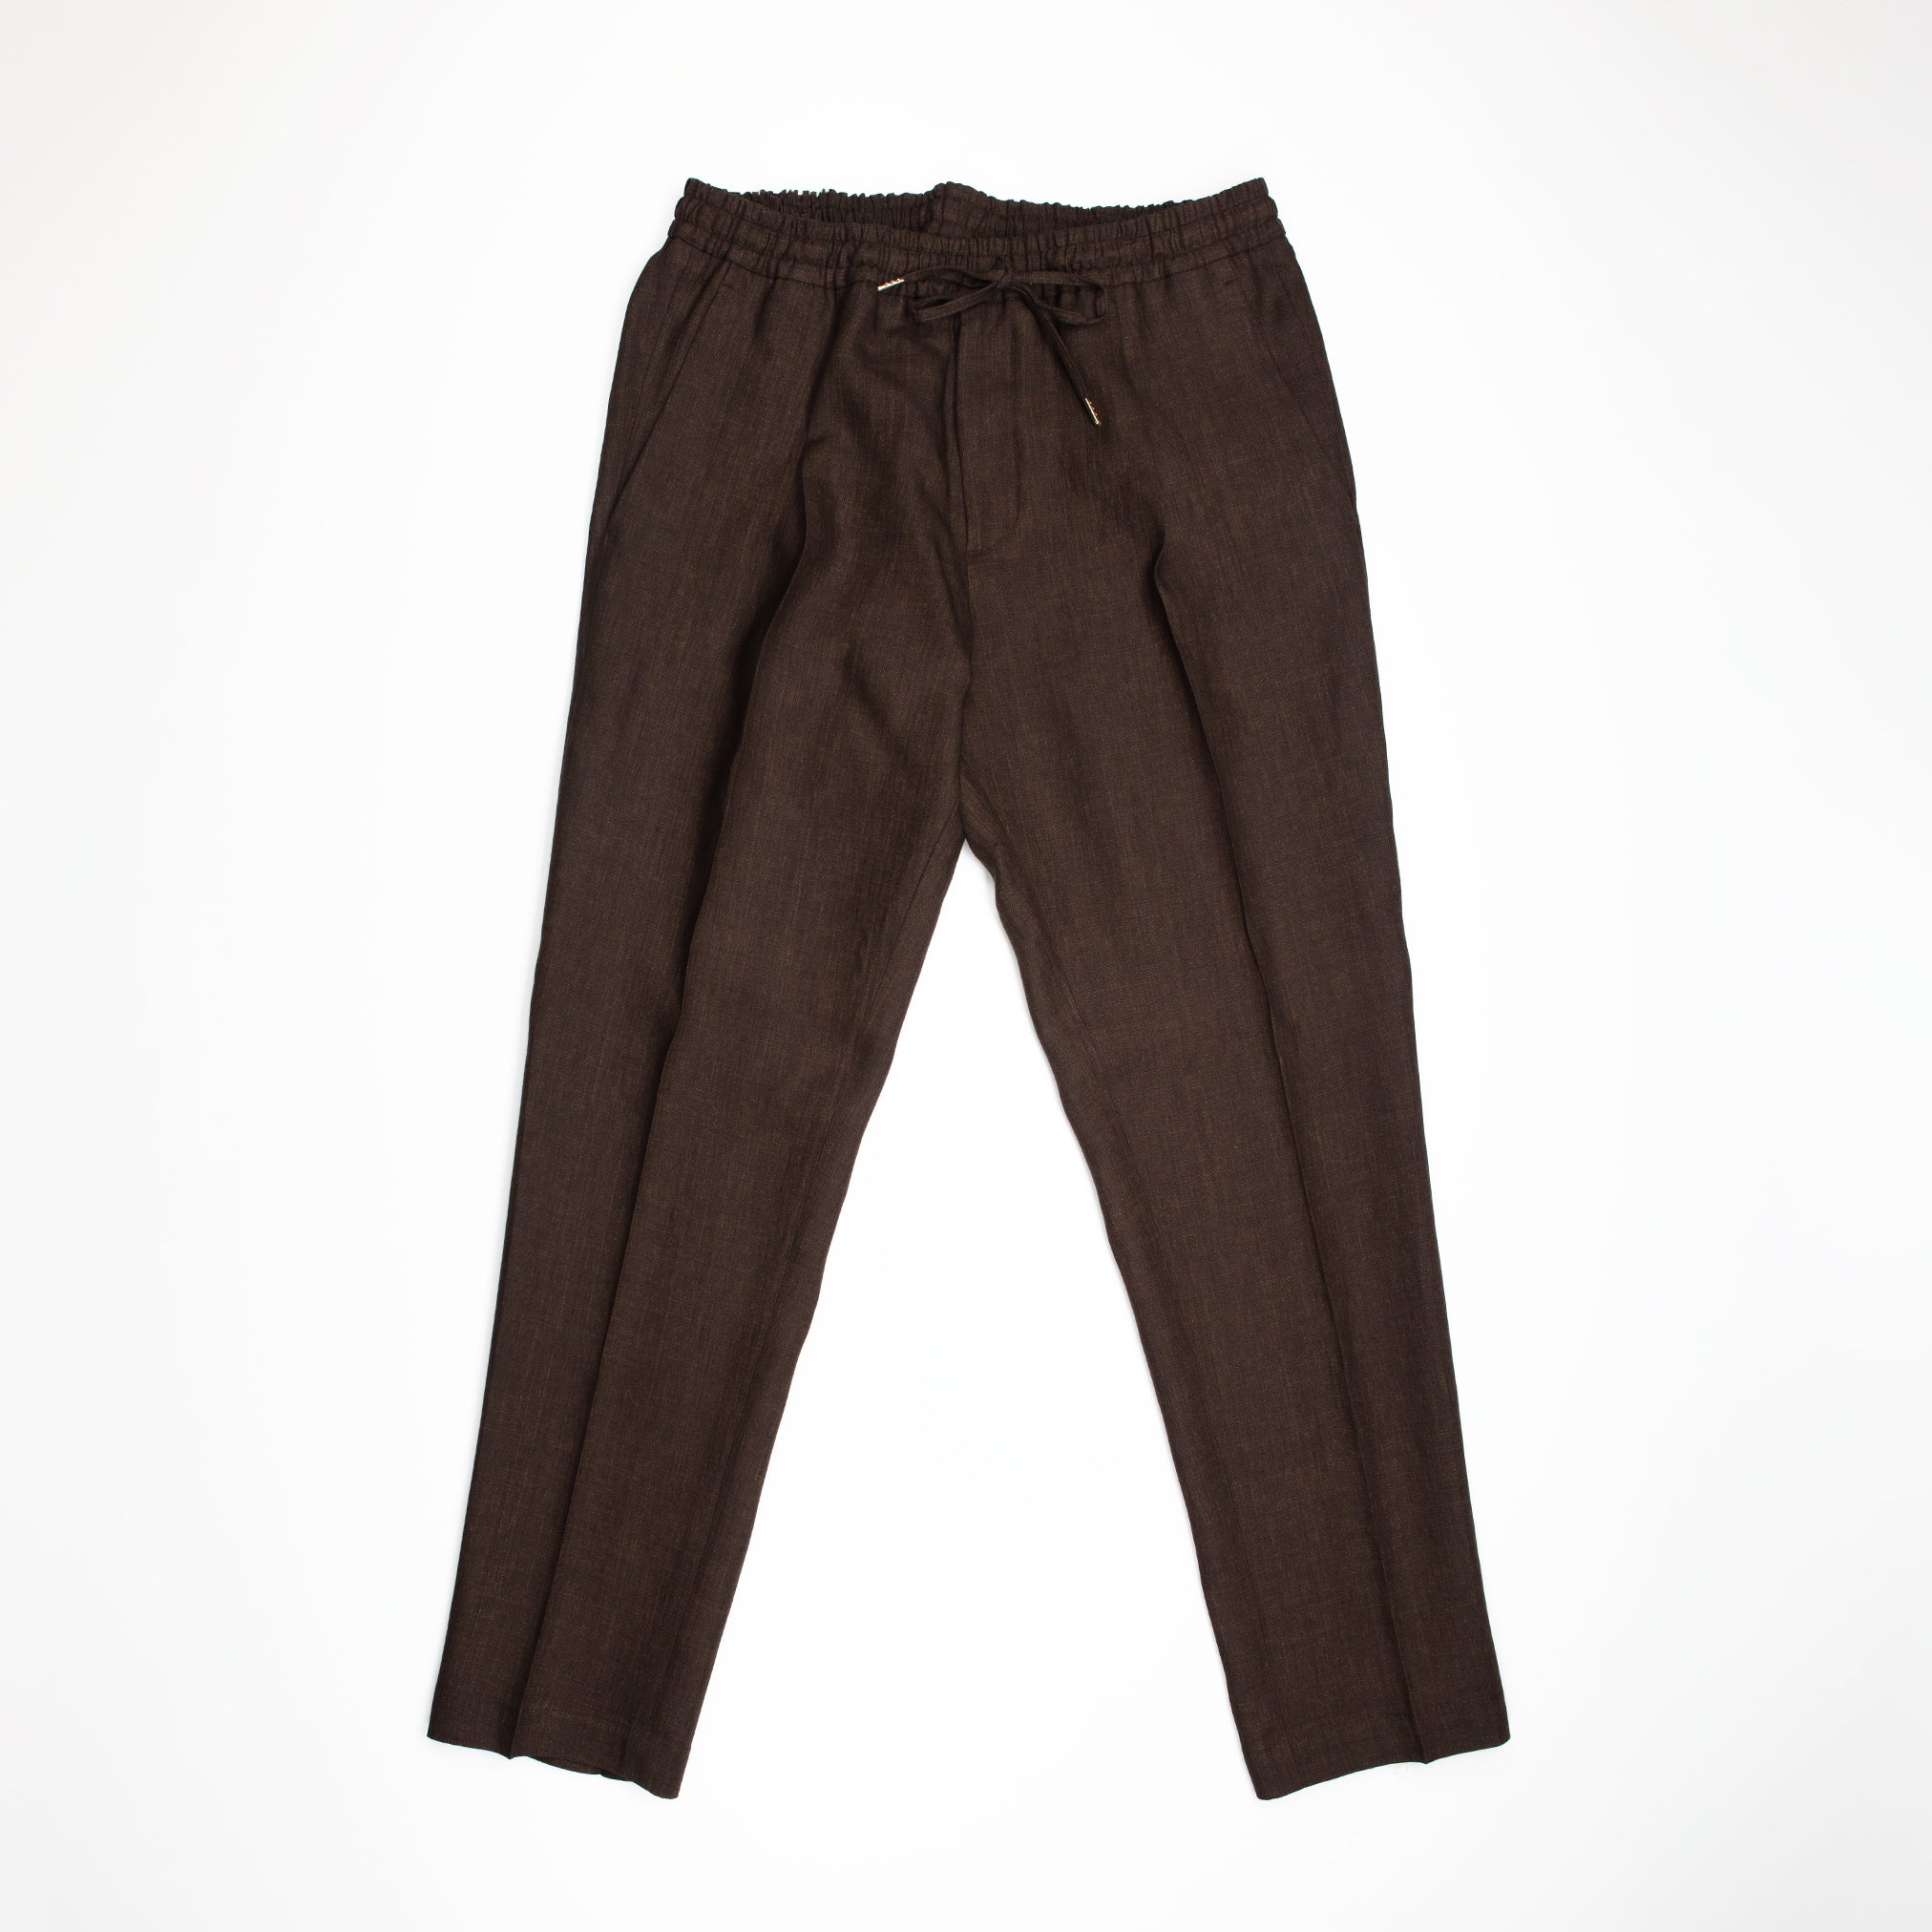 Wimbledon Pants in Brown Linen